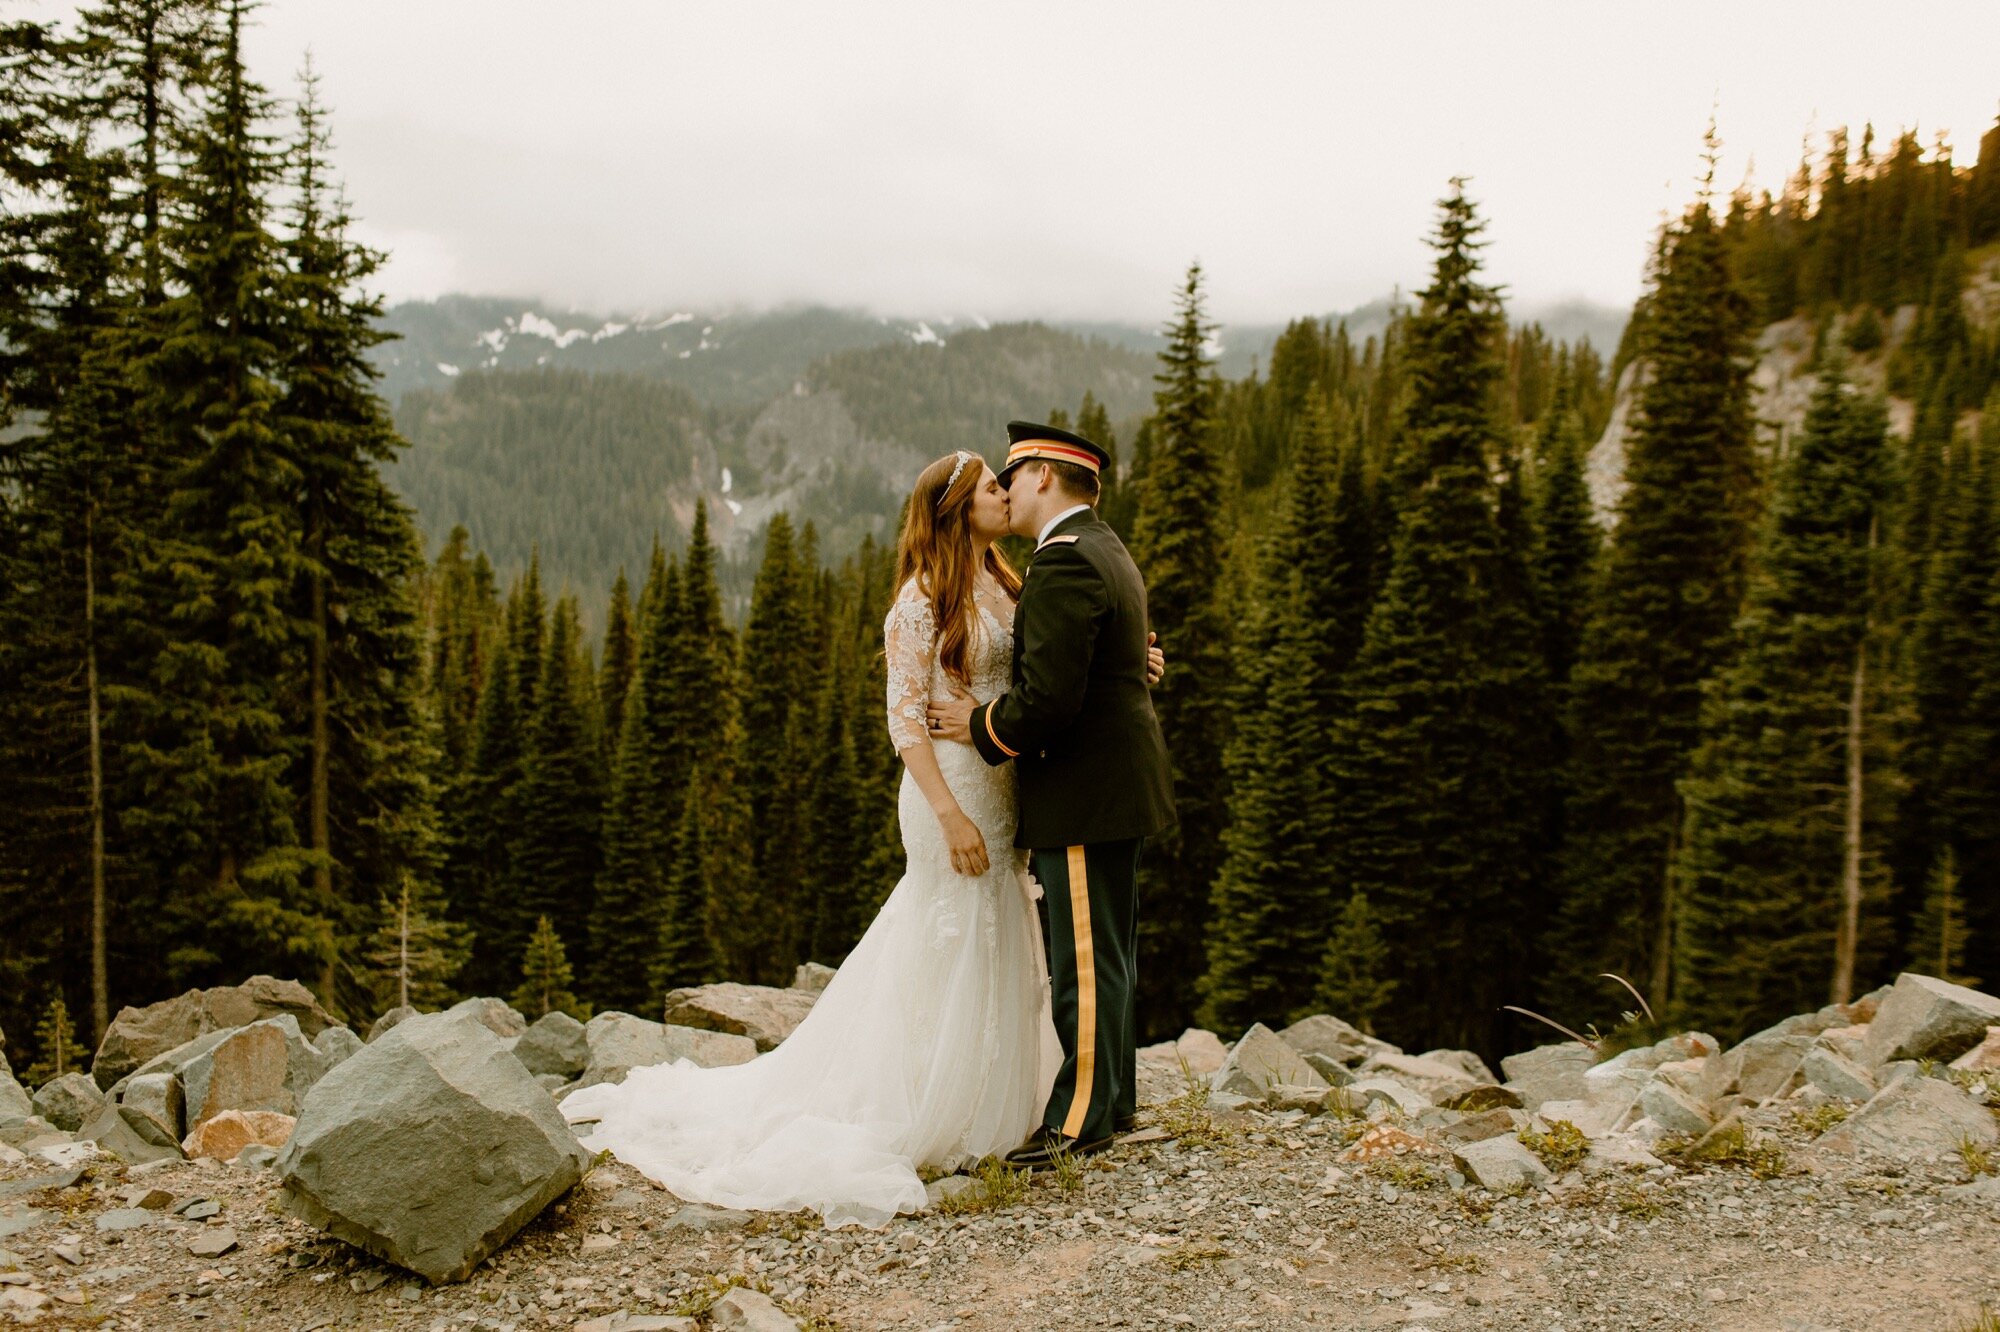 16_ginapaulson_katerinadalton-161_Mt. Rainier Adventure Elopement Bride and Groom.jpg